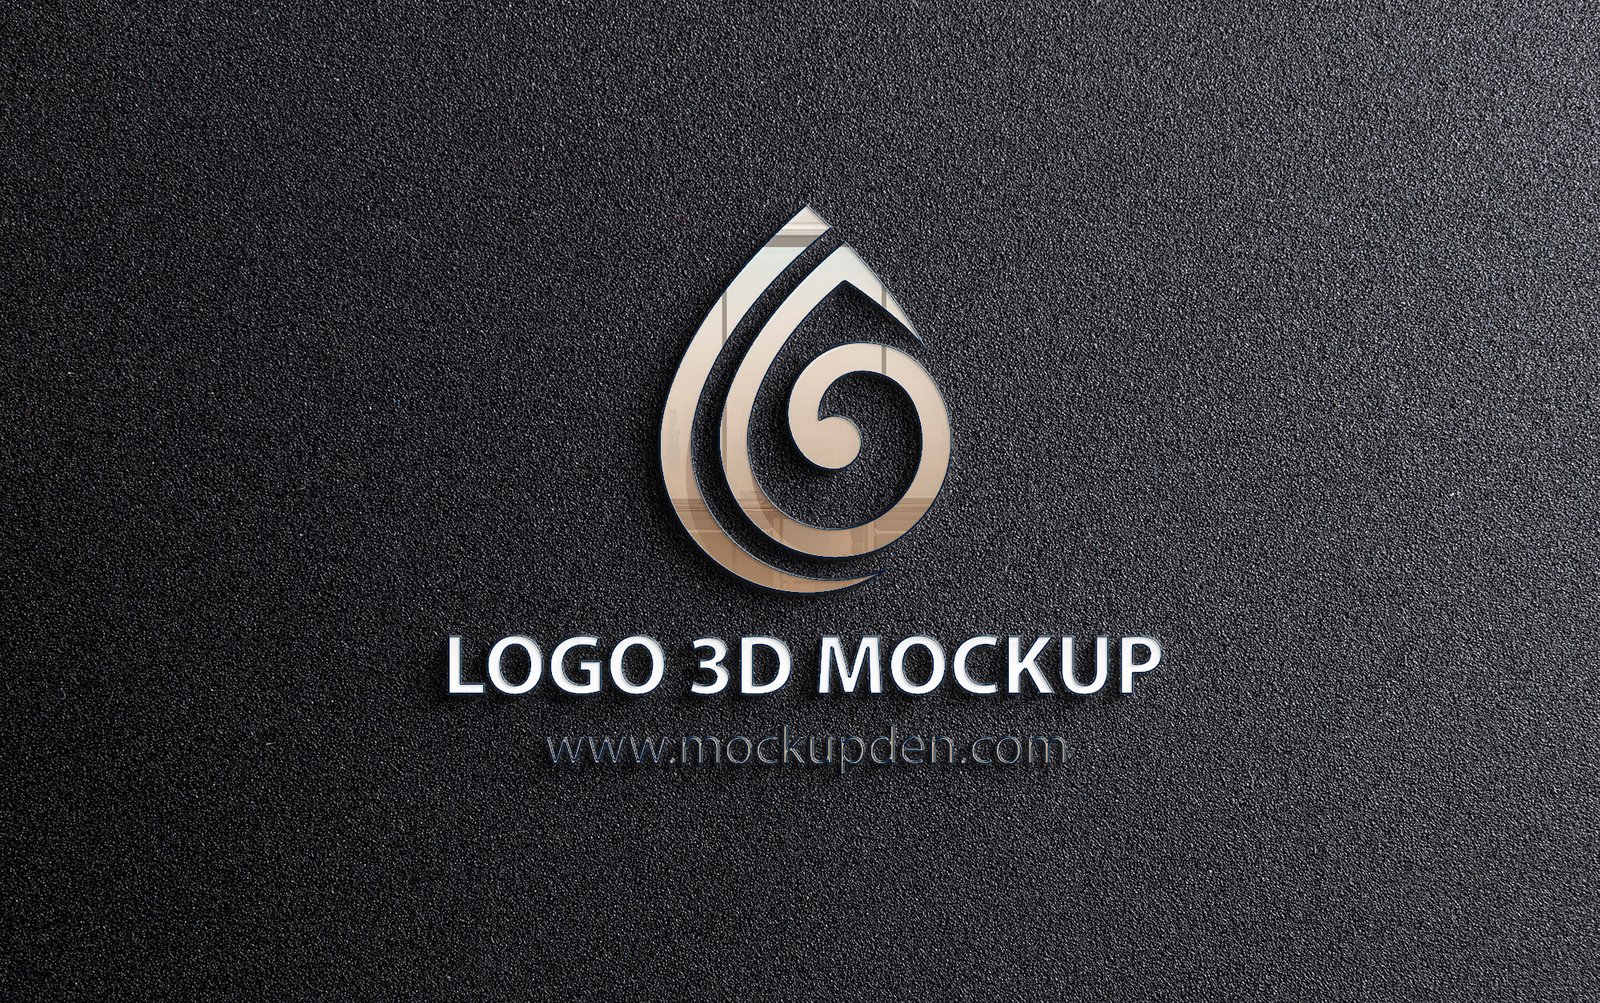 Free Logo 3D Mockup PSD Template Mockup Den